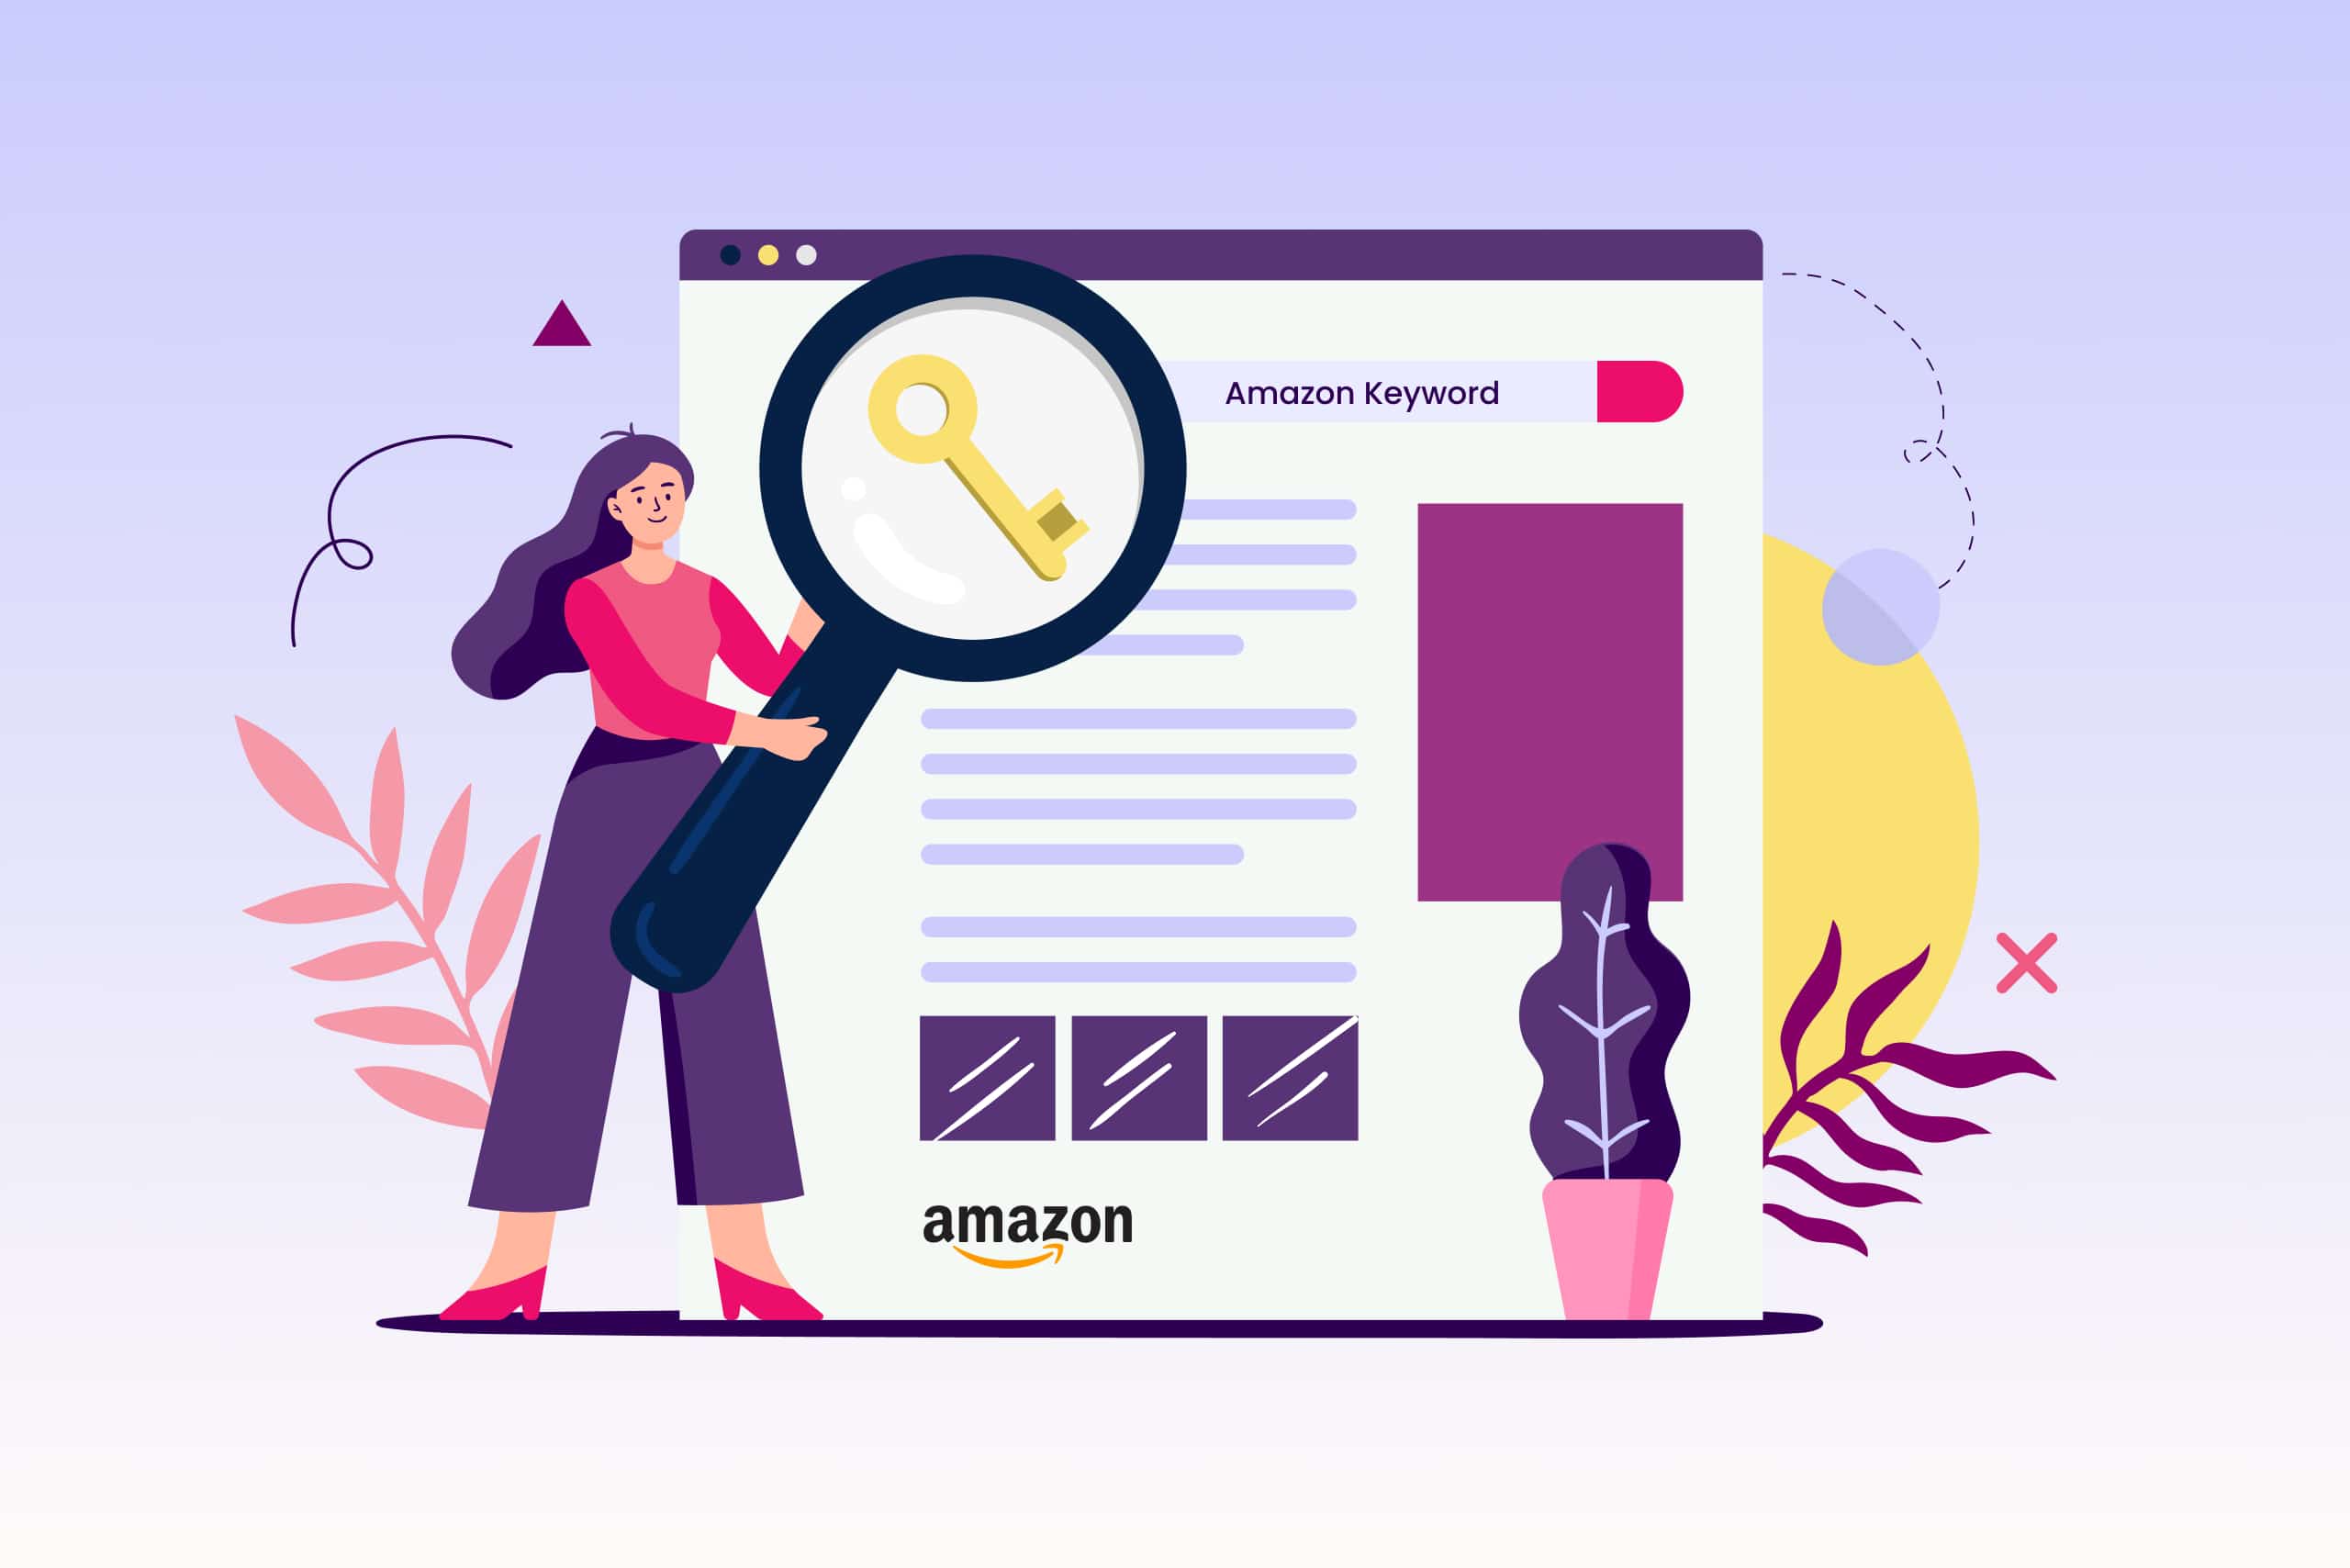 11 Amazon Keyword Tips to Increase Your Sales